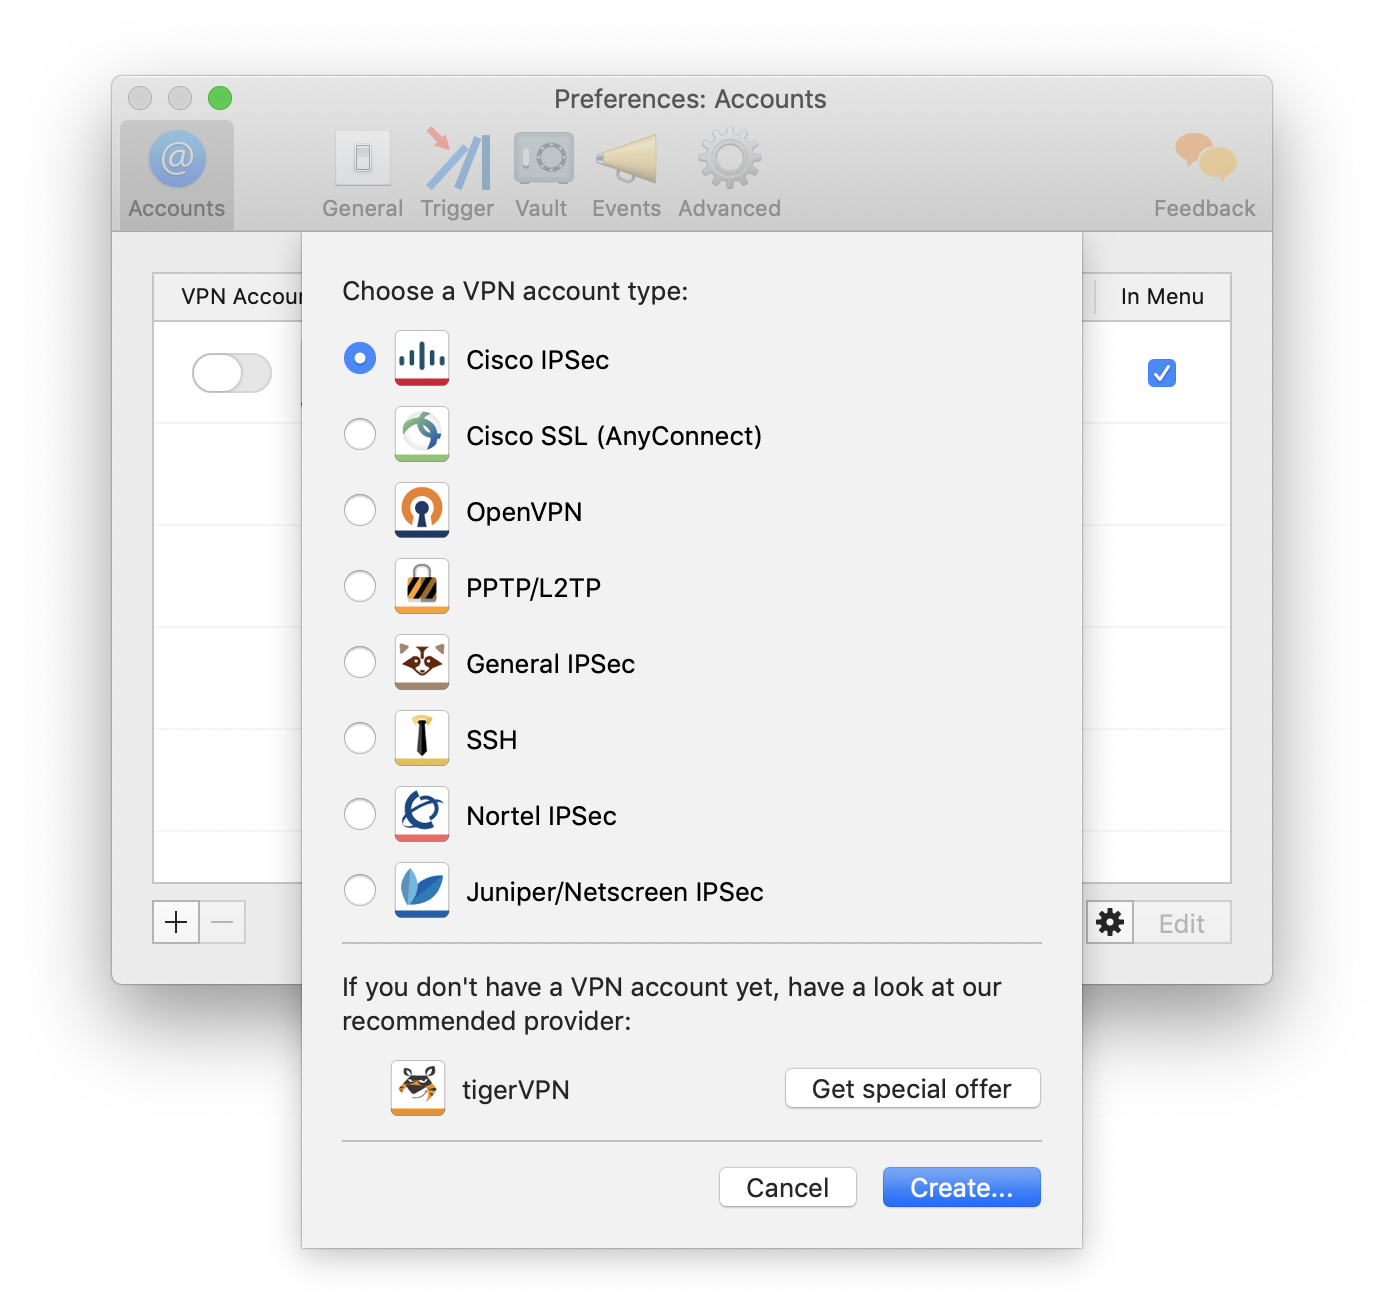 setup mac for remote access